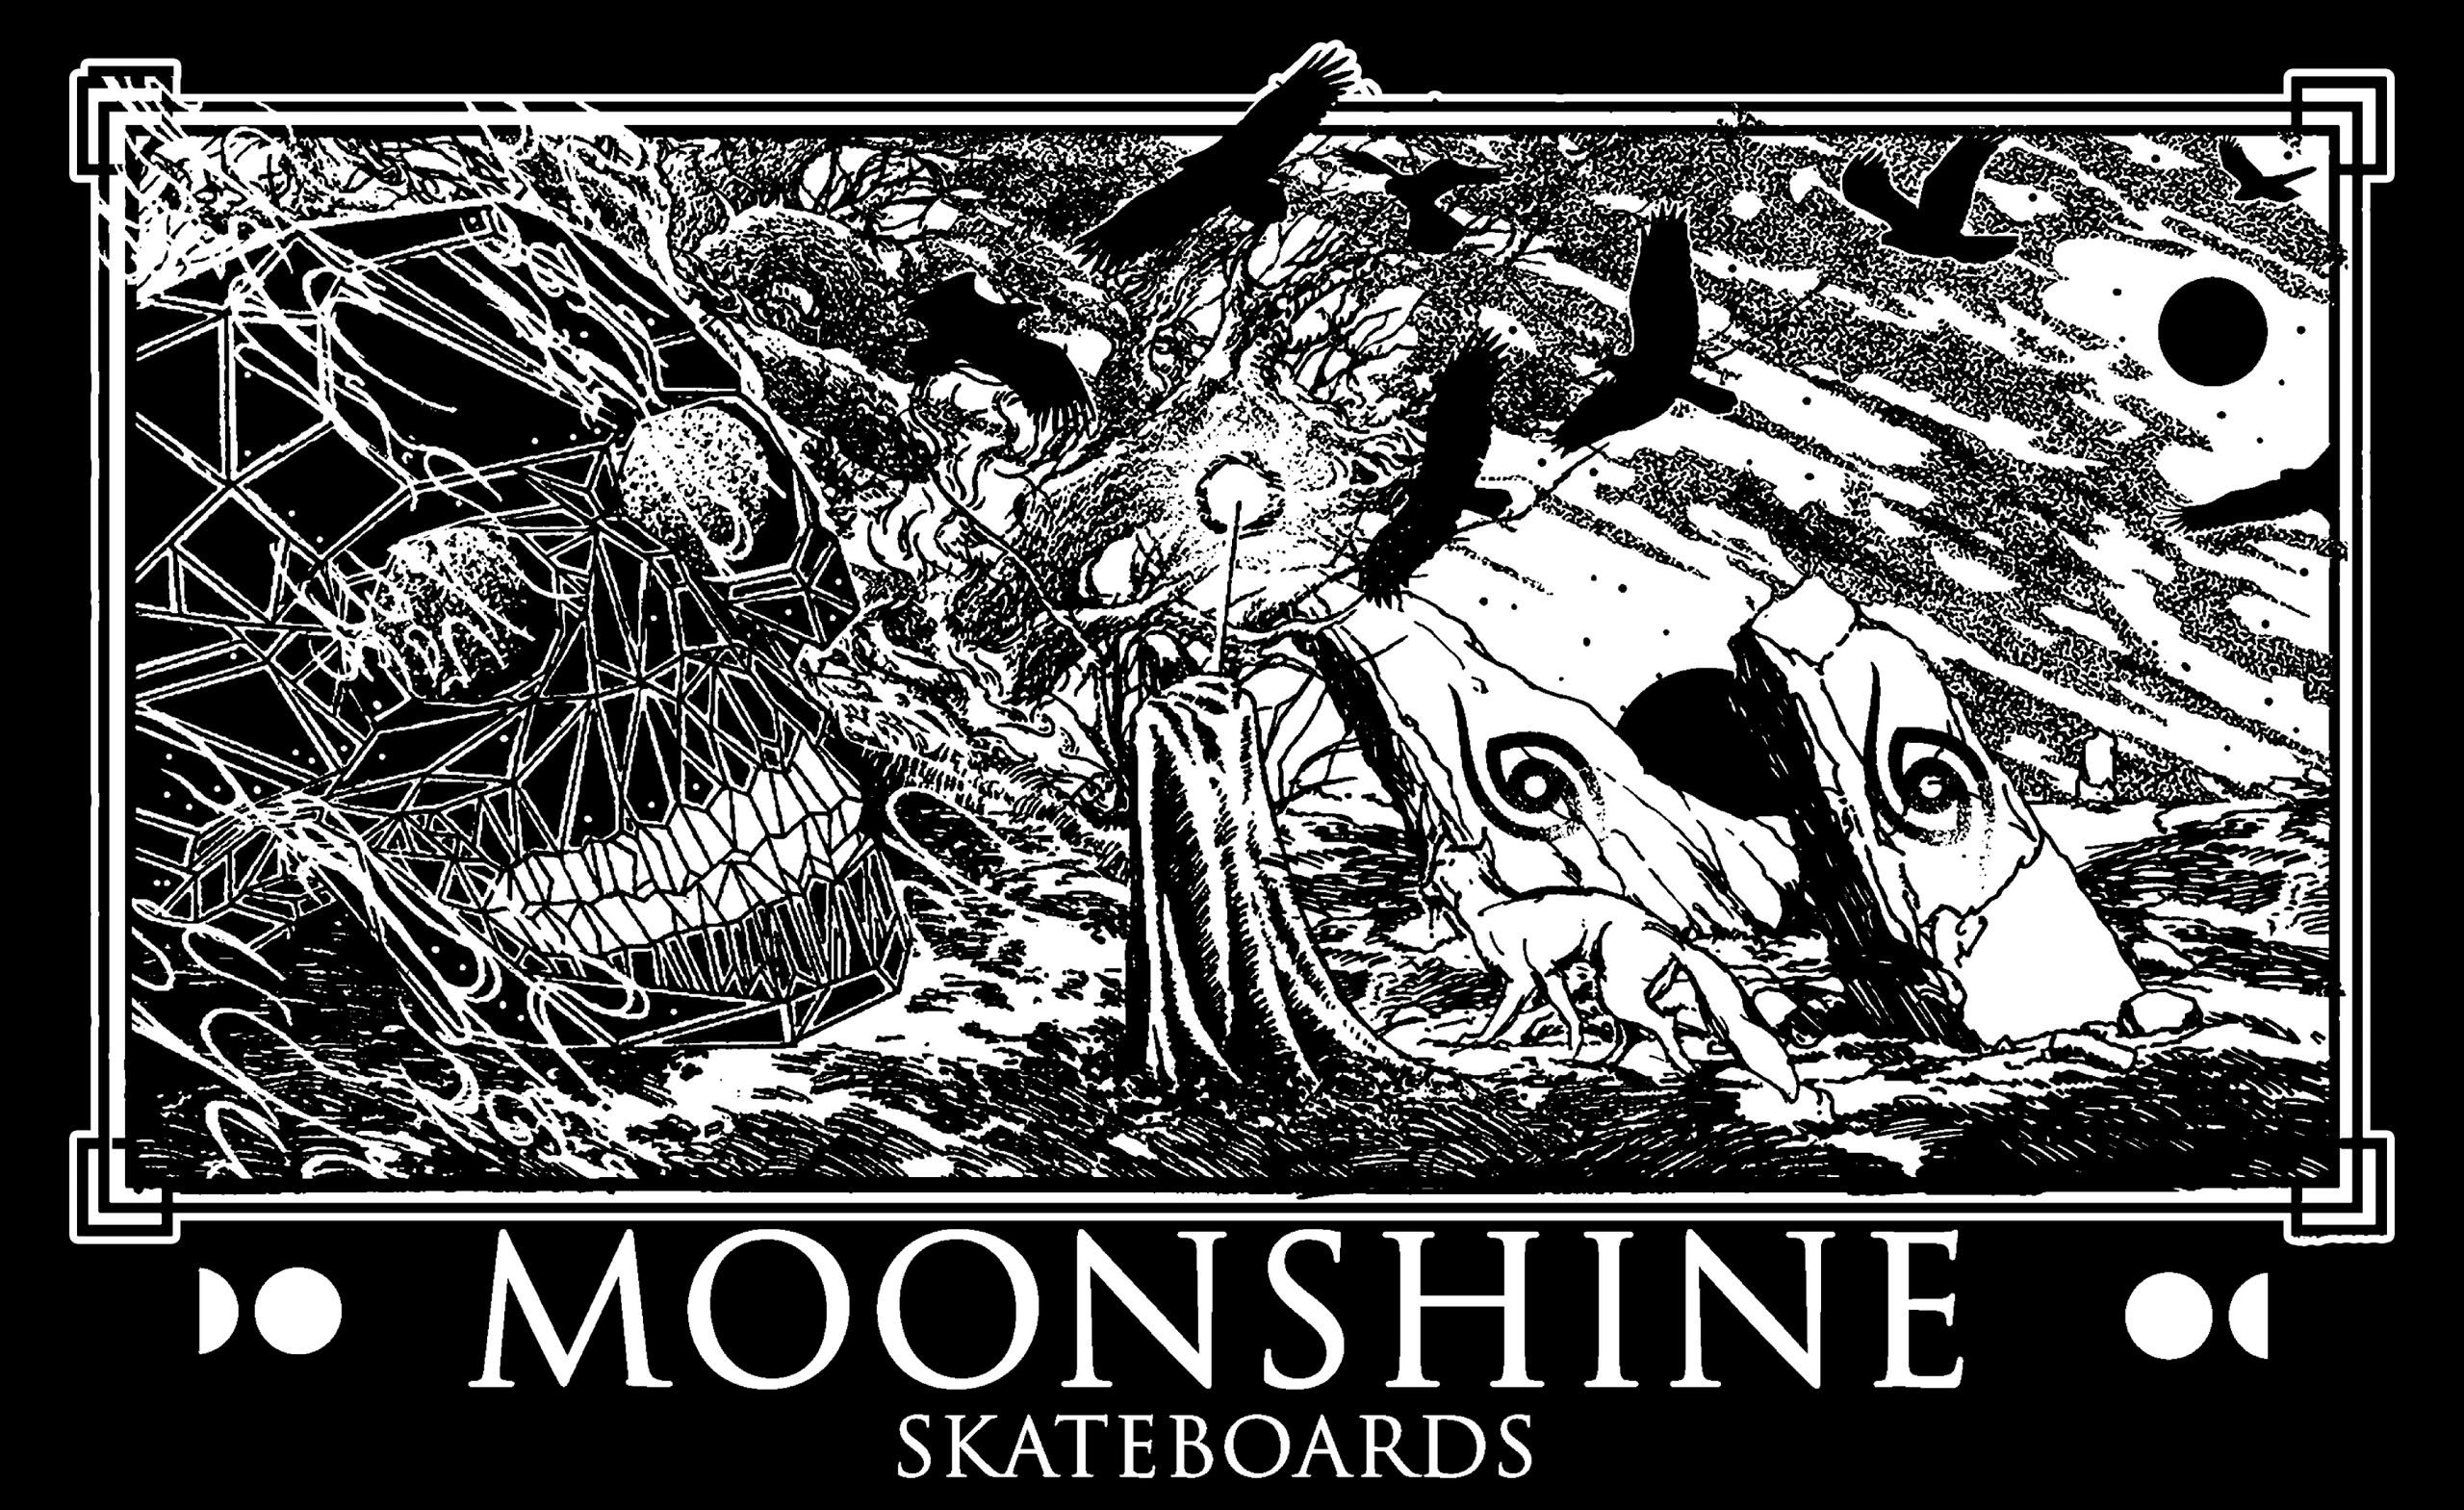 Moonshine skateboards home freestyle skateboards old school shape skateboards zorlac 